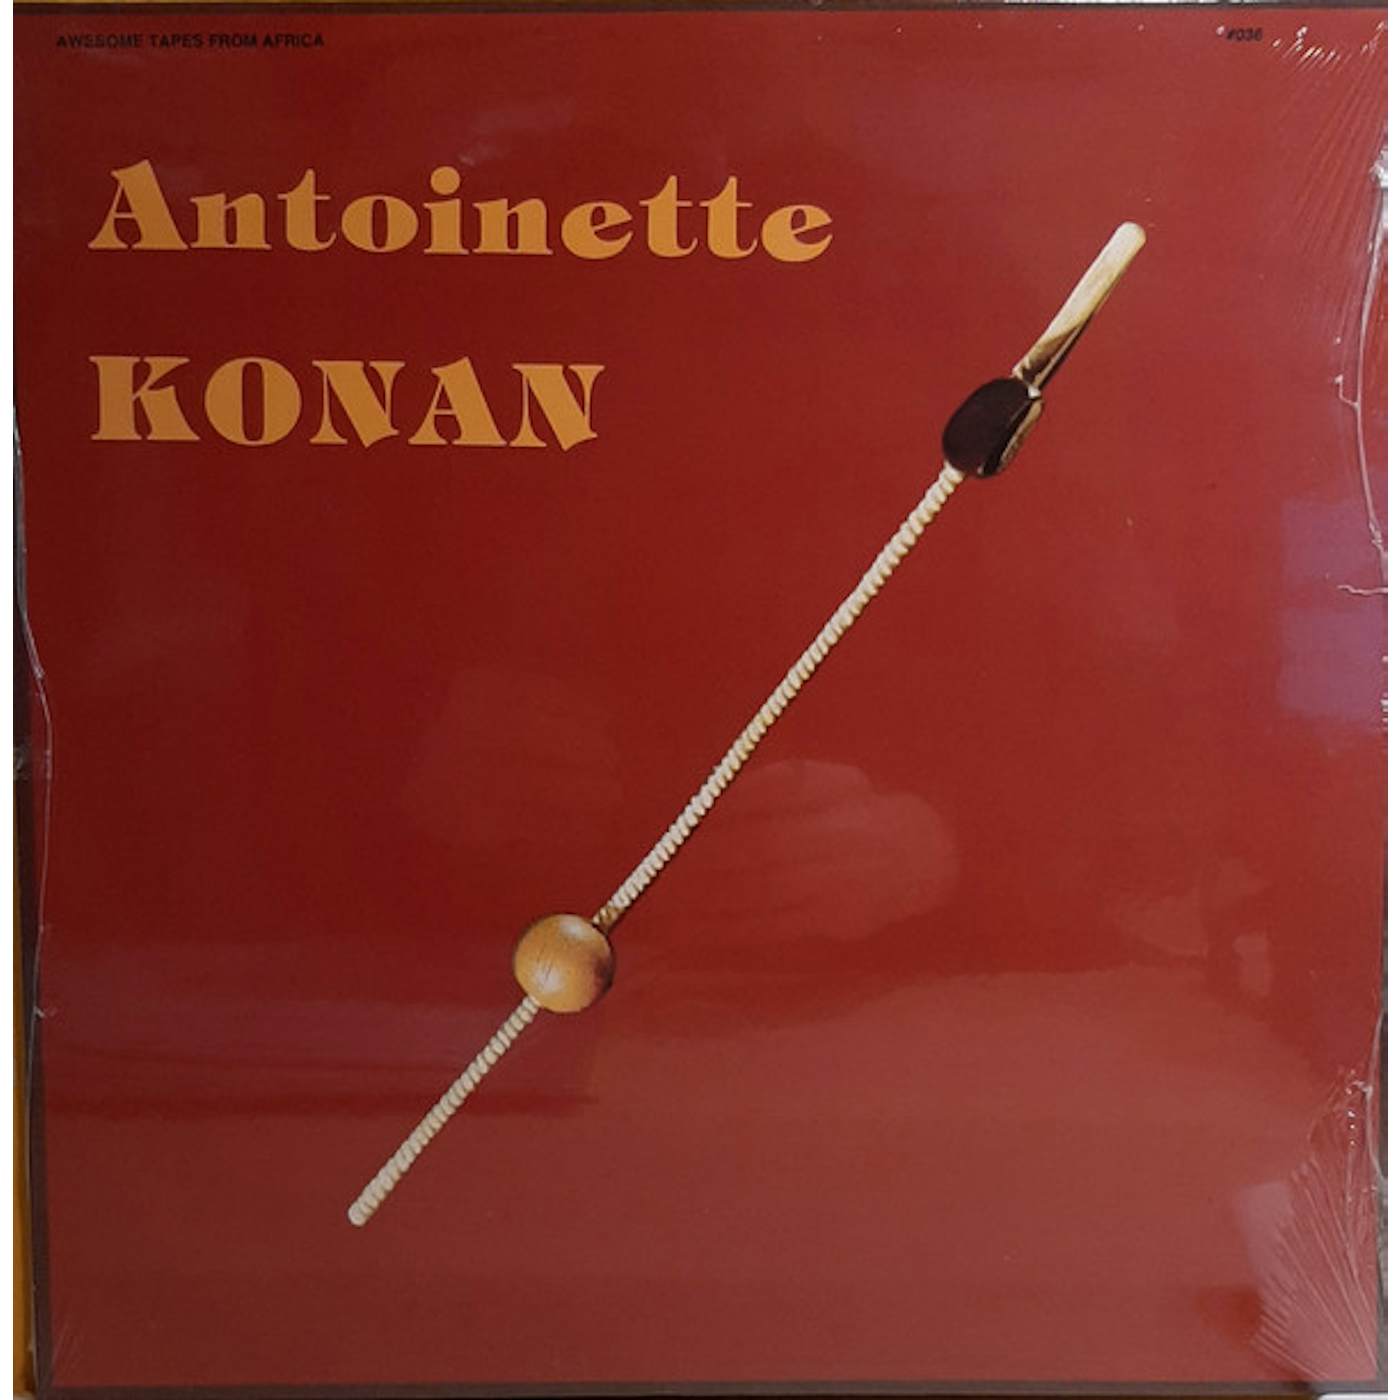 Antoinette Konan Vinyl Record